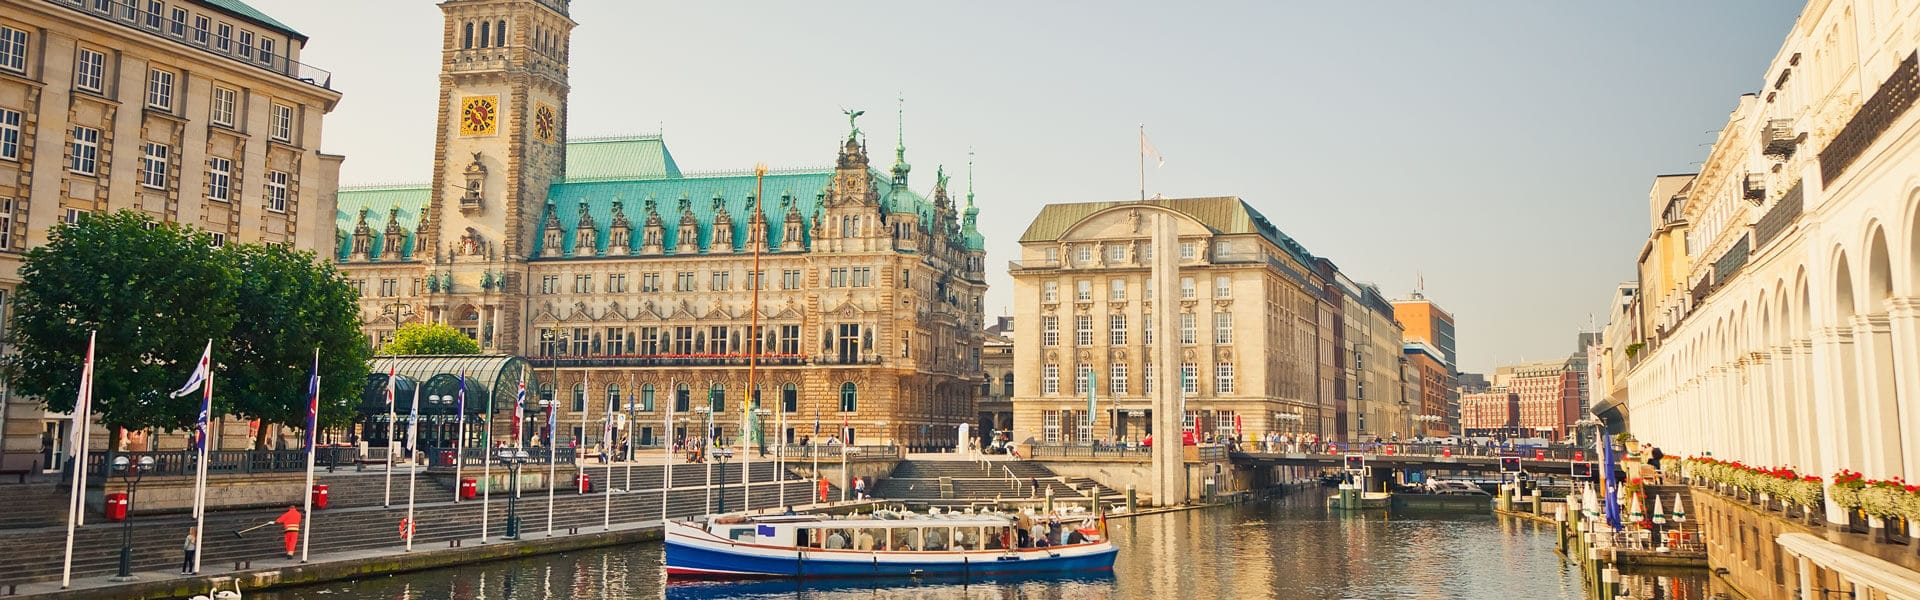 event planning company Hamburg - bceed - travel - teambuilding excursions